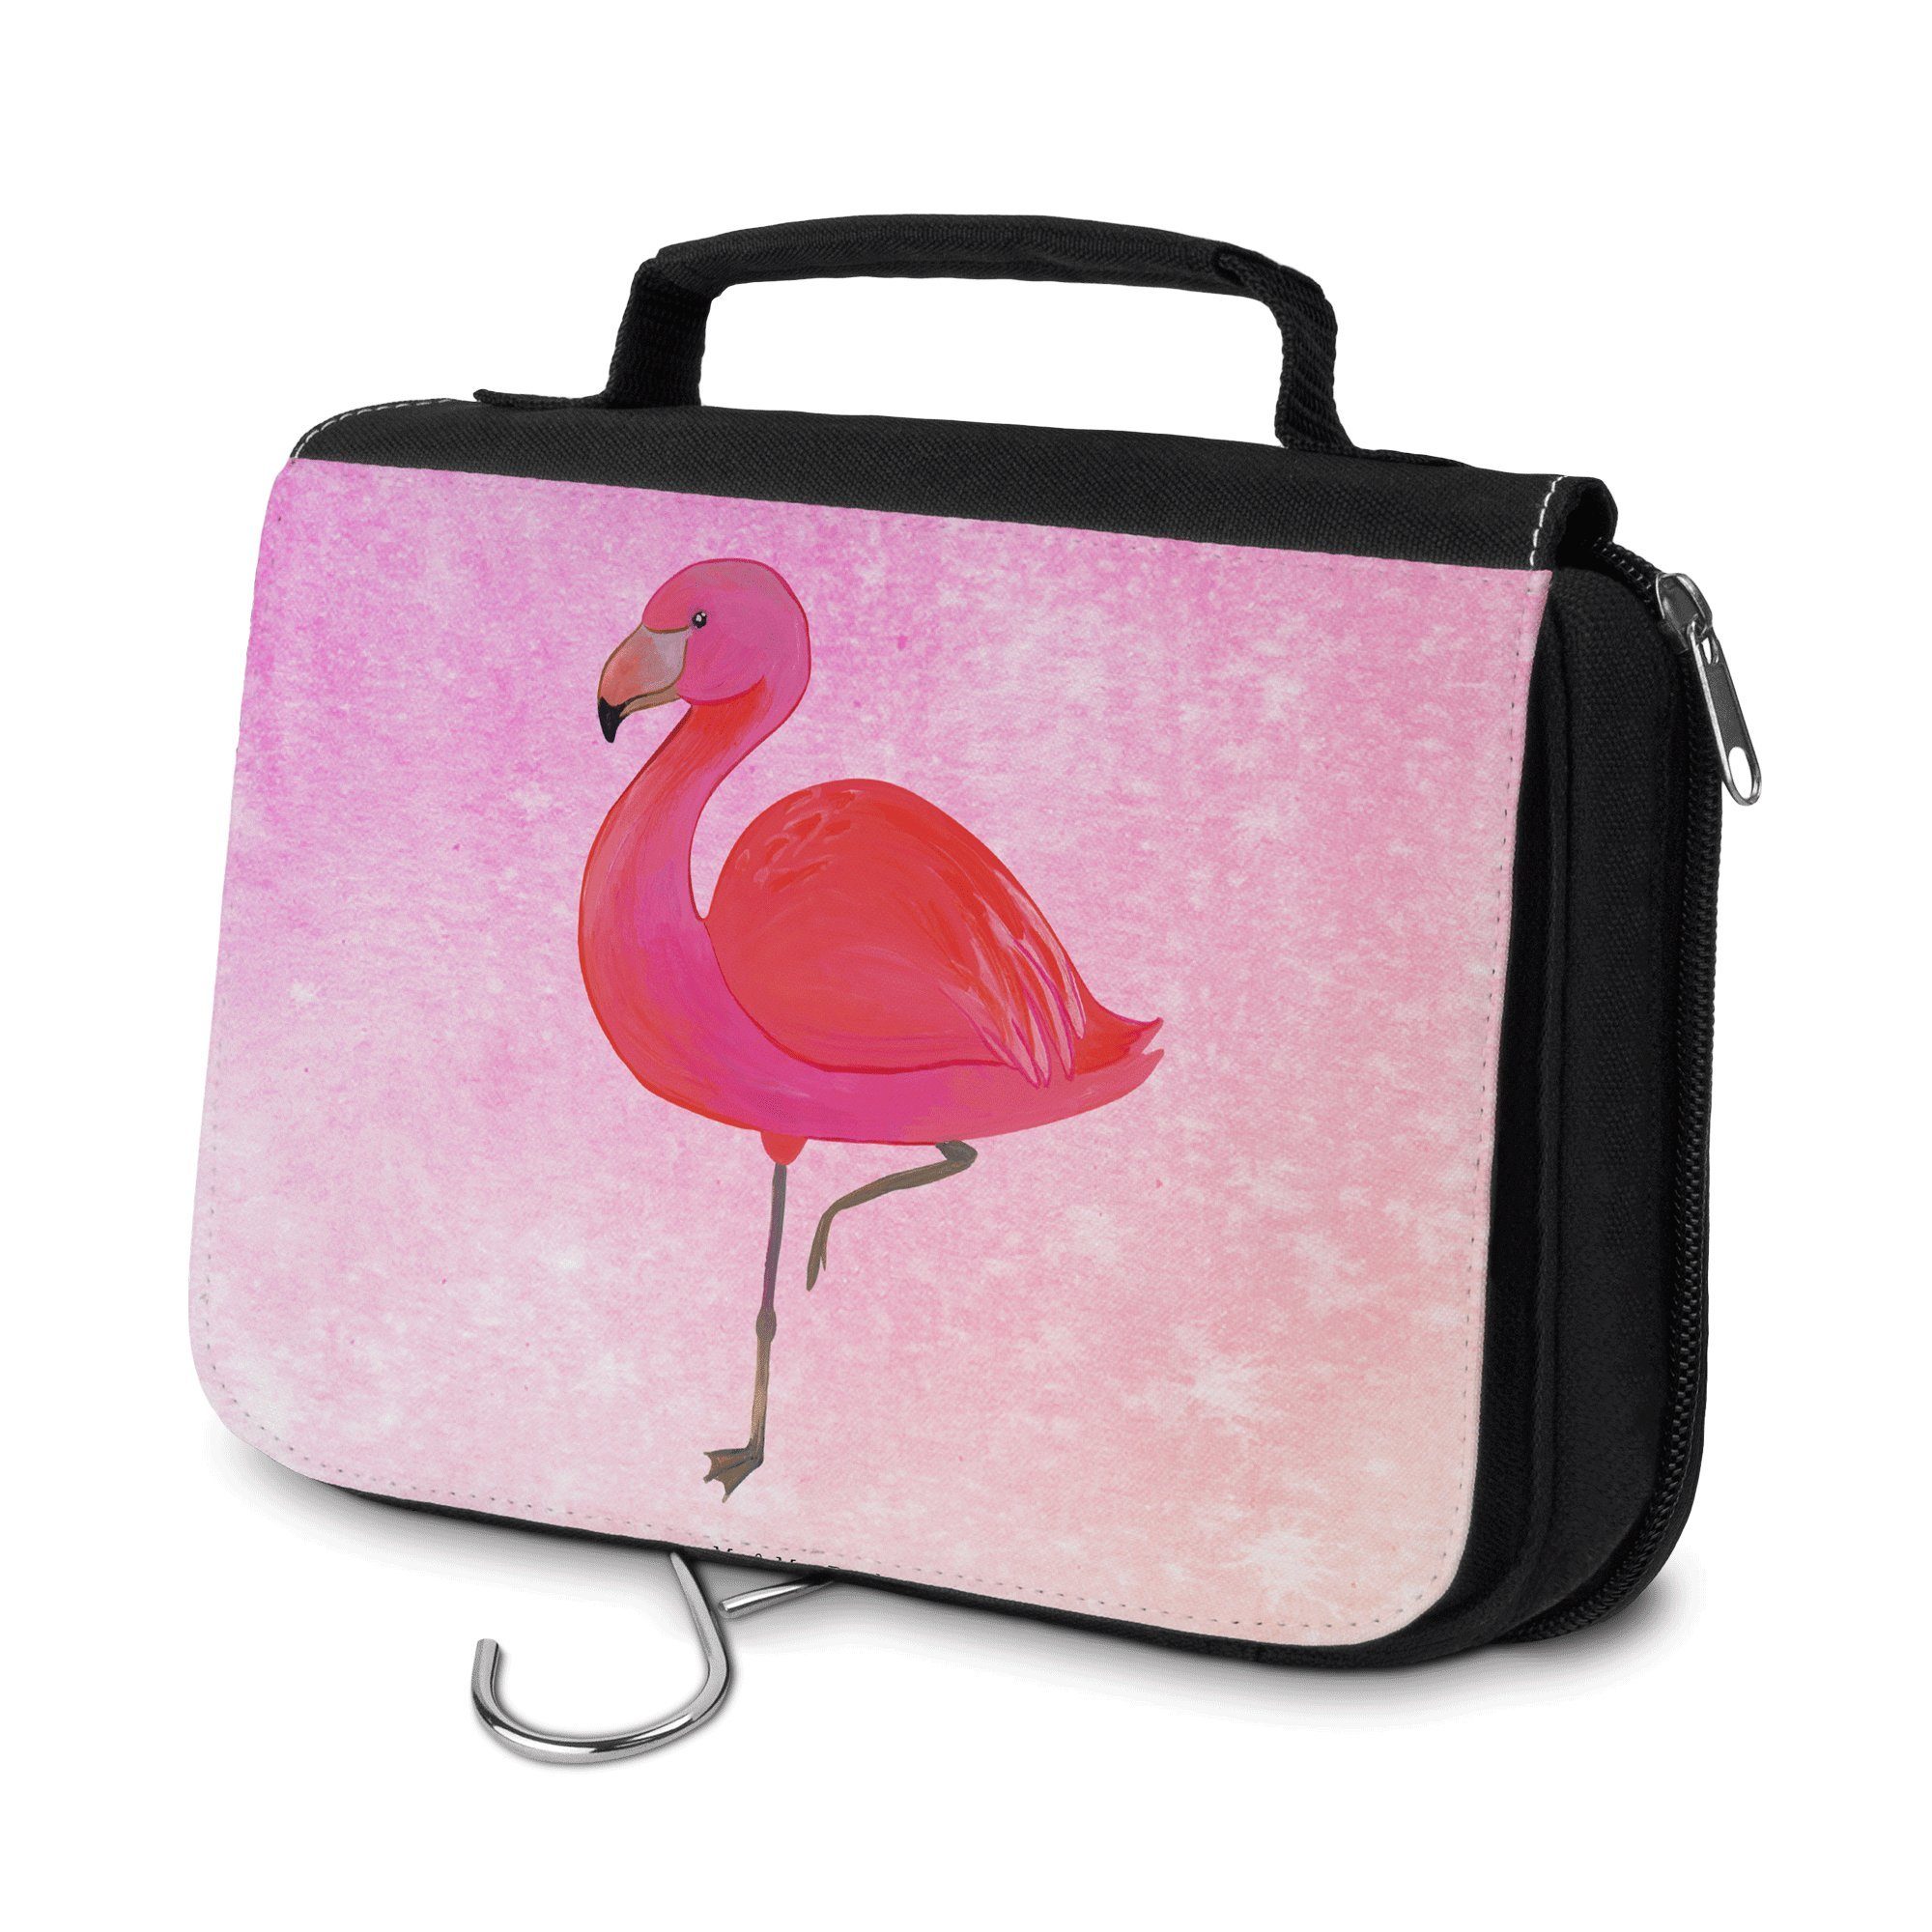 Mr. & Mrs. Panda Kulturbeutel Flamingo classic - Aquarell Pink - Geschenk, Schminktasche, Organizer (1-tlg)